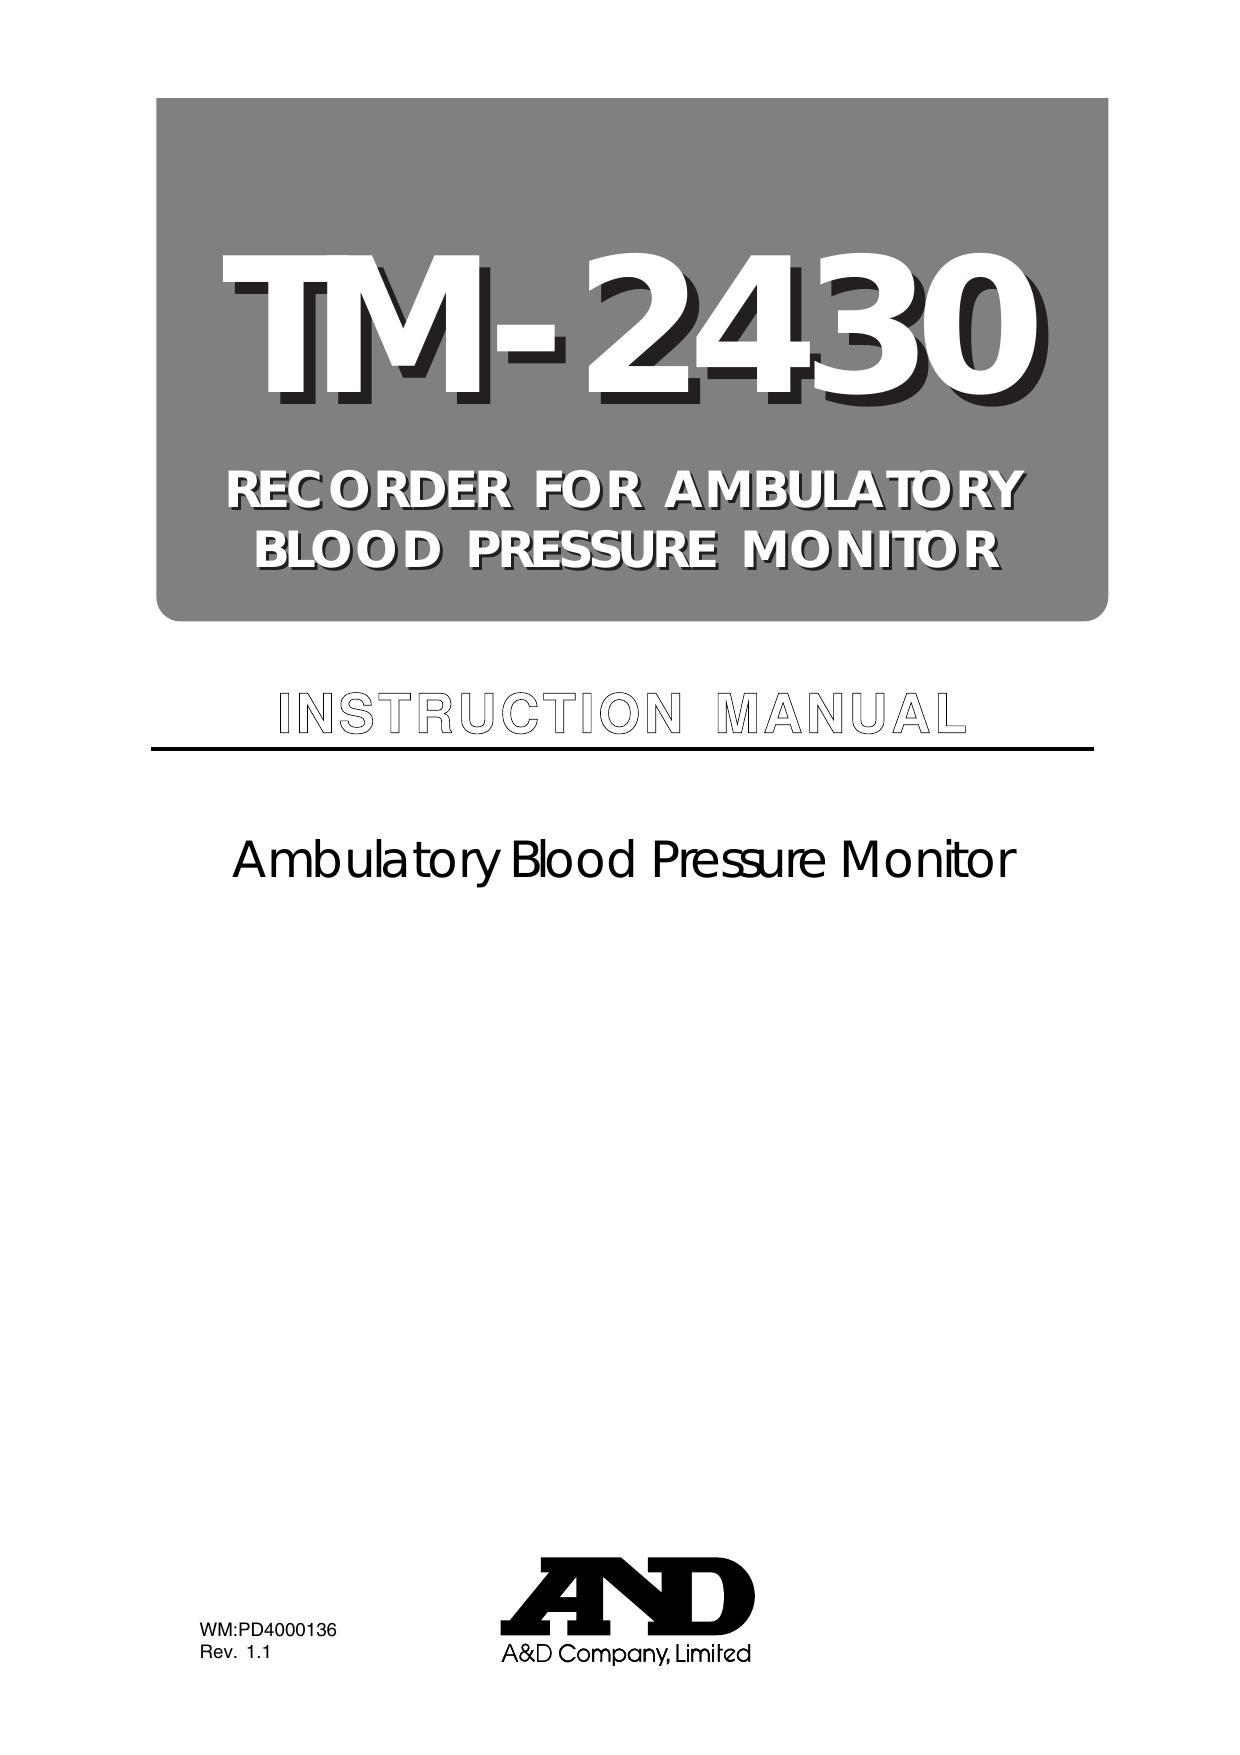 tm-2430-rec-order-for-ambulatory-blood-pressure-monitor-instruction-manual.pdf